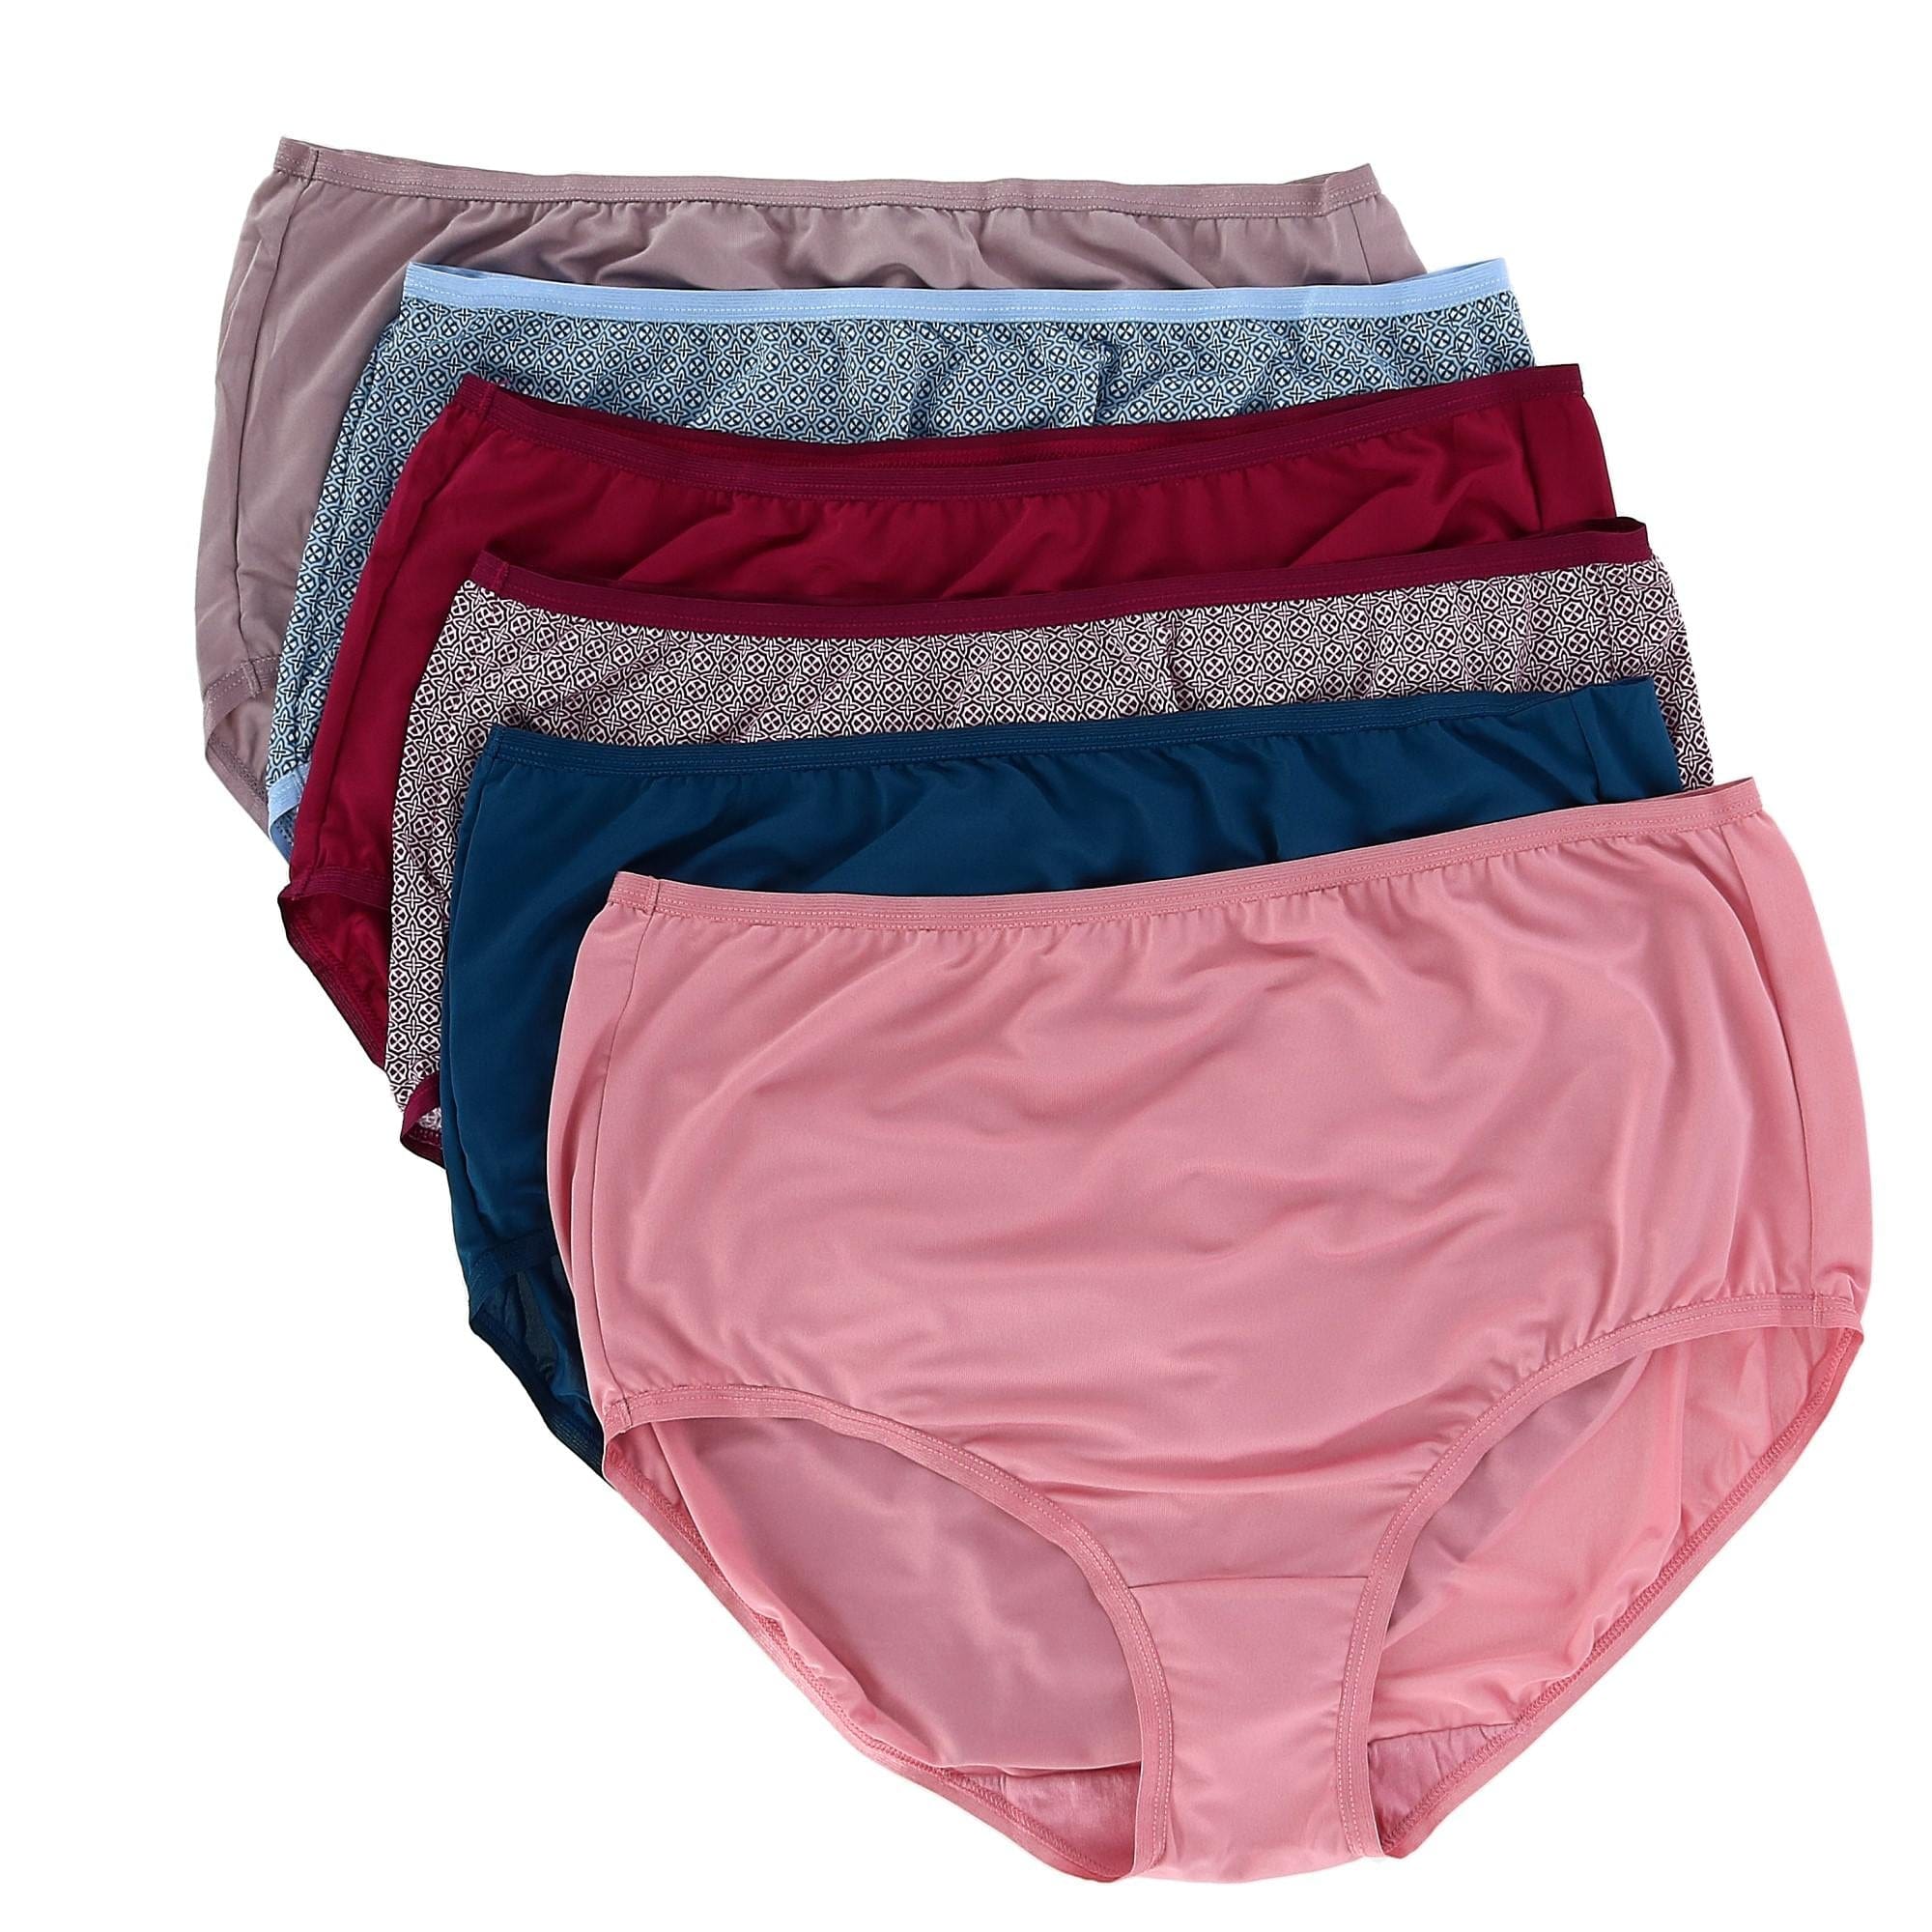 Women's Microfiber Brief Underwear (6 Pack) by Fruit of the Loom